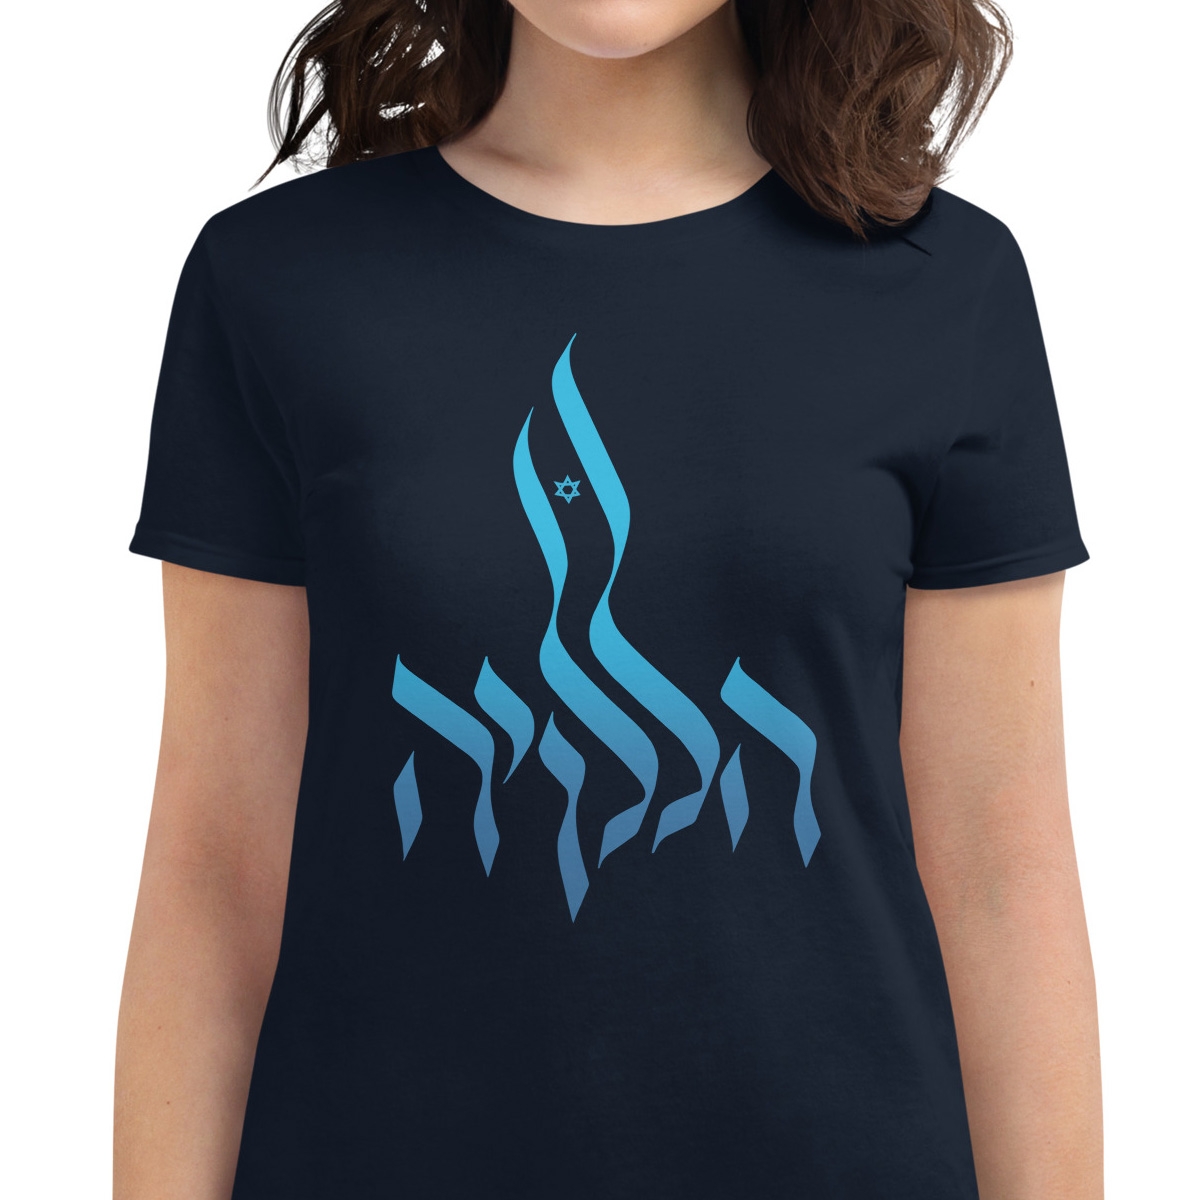 Hallelujah Israeli Flag Women's T-Shirt (Choice of Colors) - 1